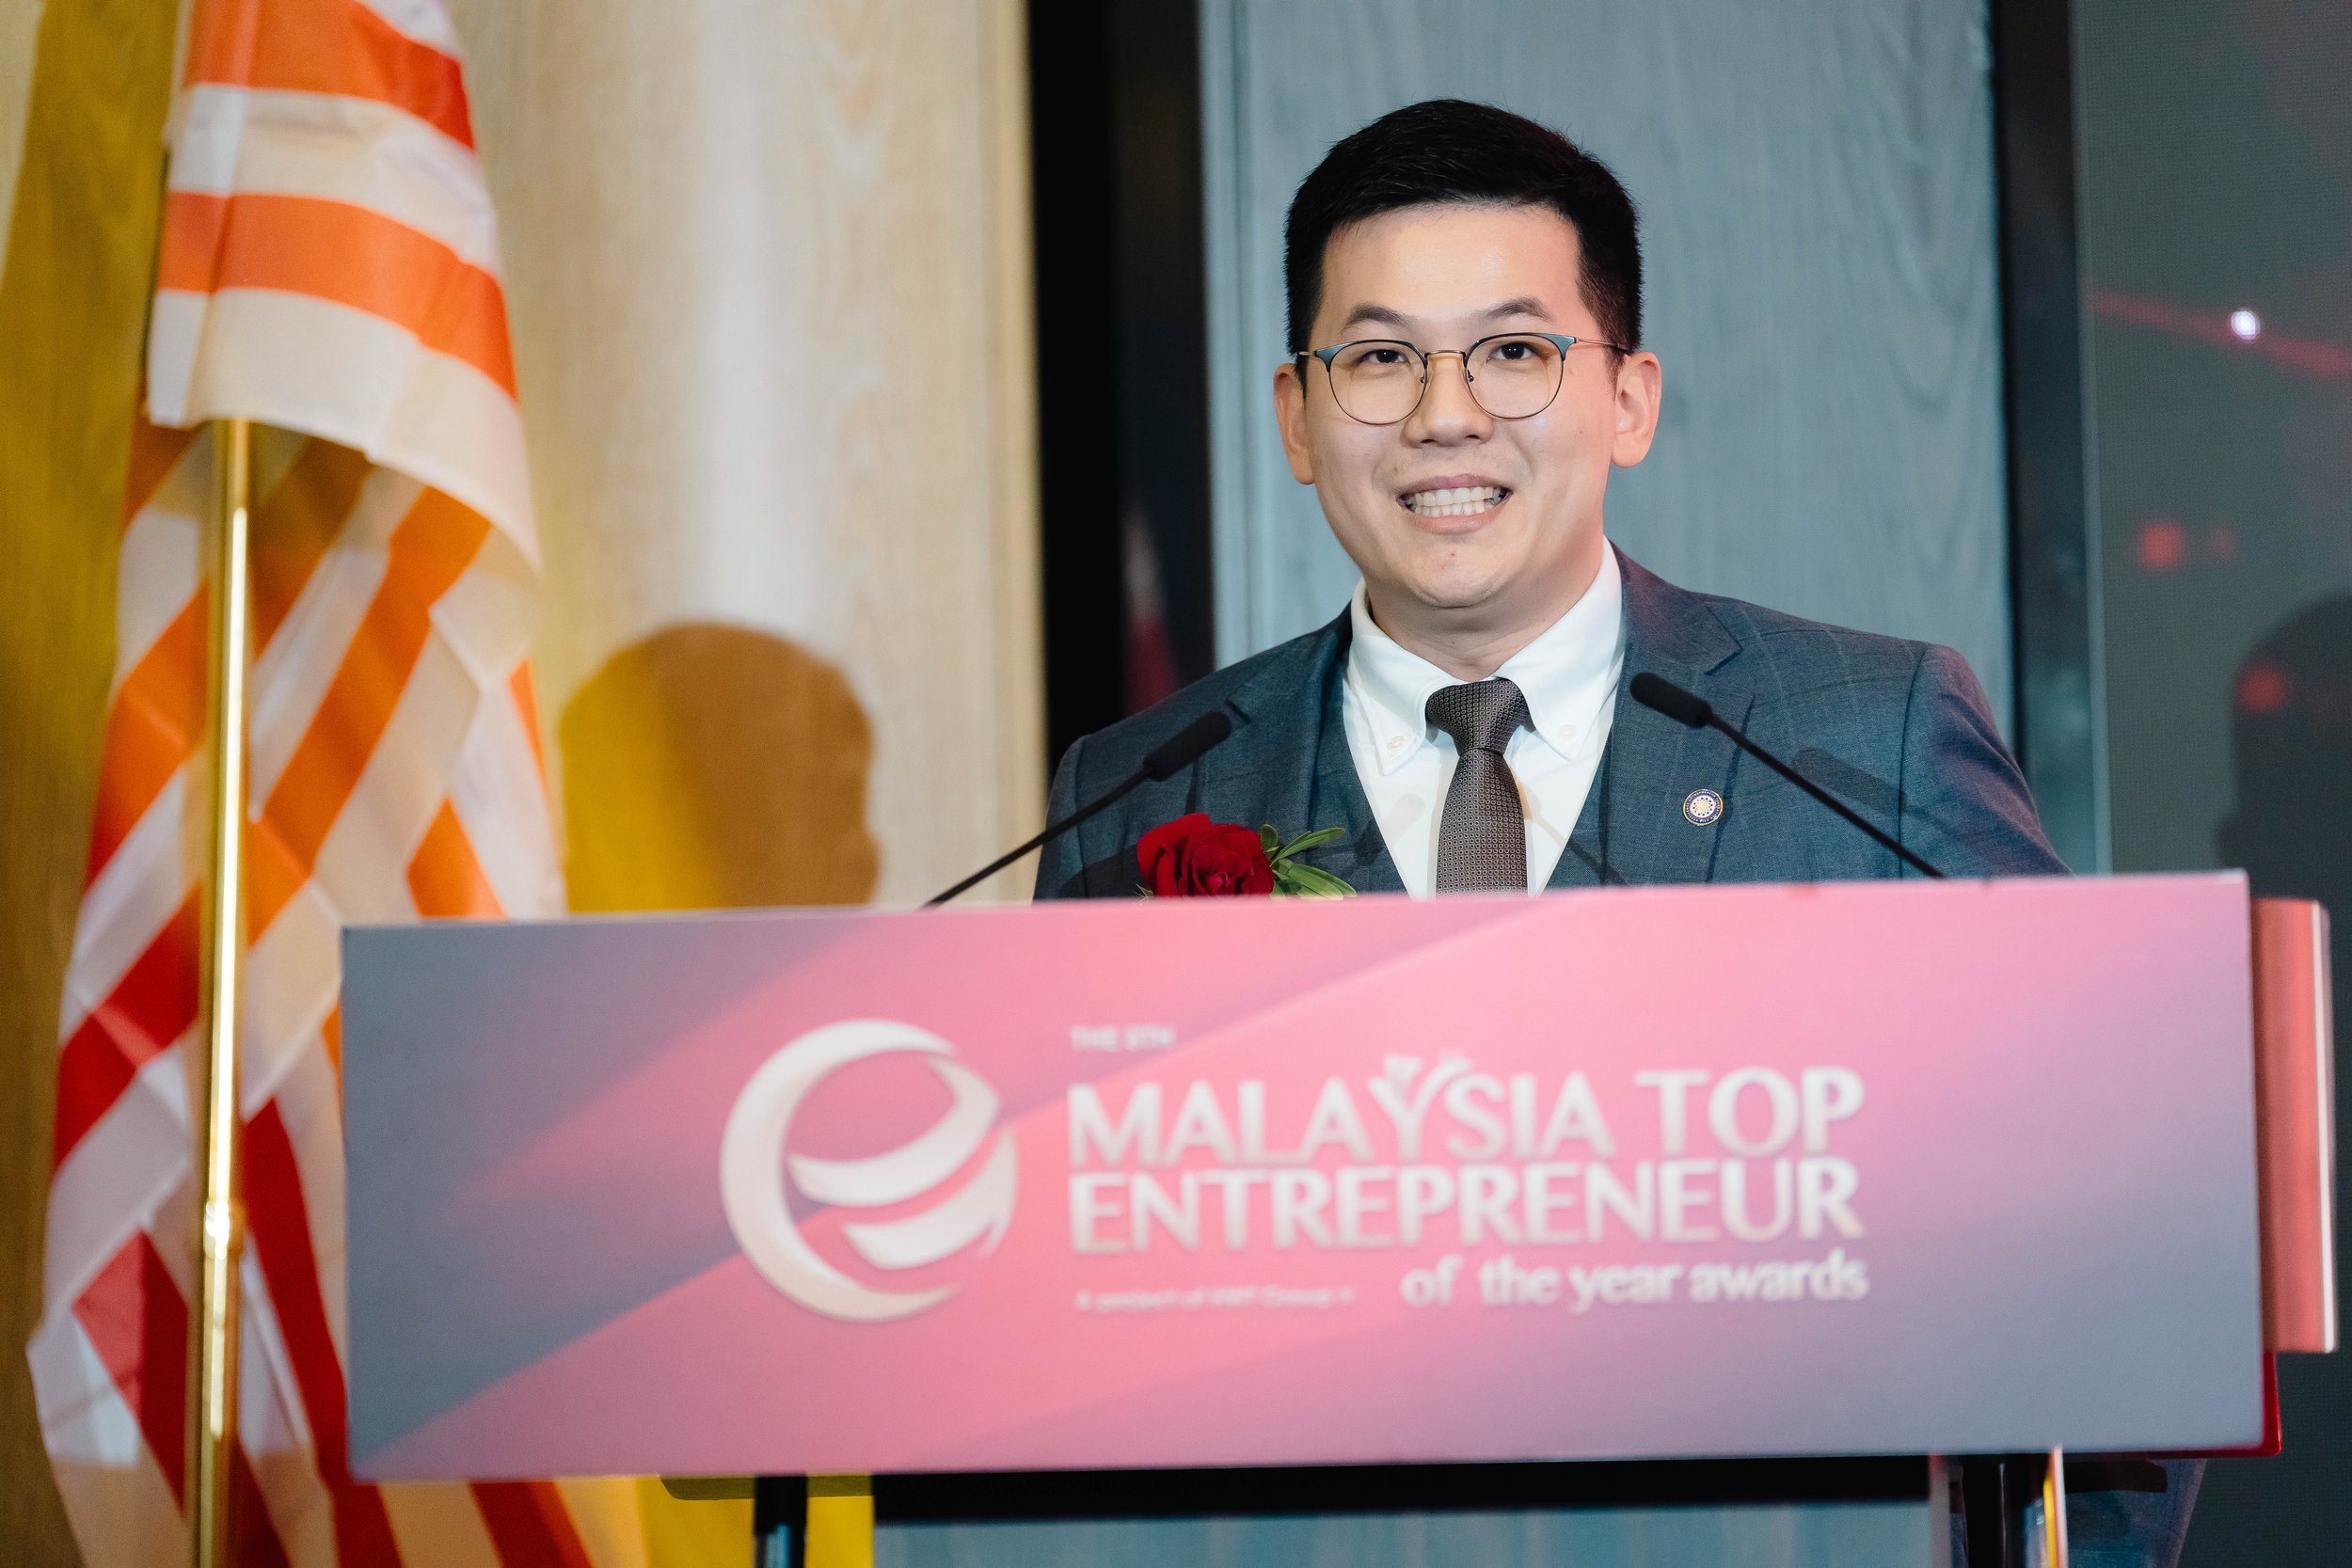 Malaysia-top-entrepreneur-of-the-year-award-1376.jpg